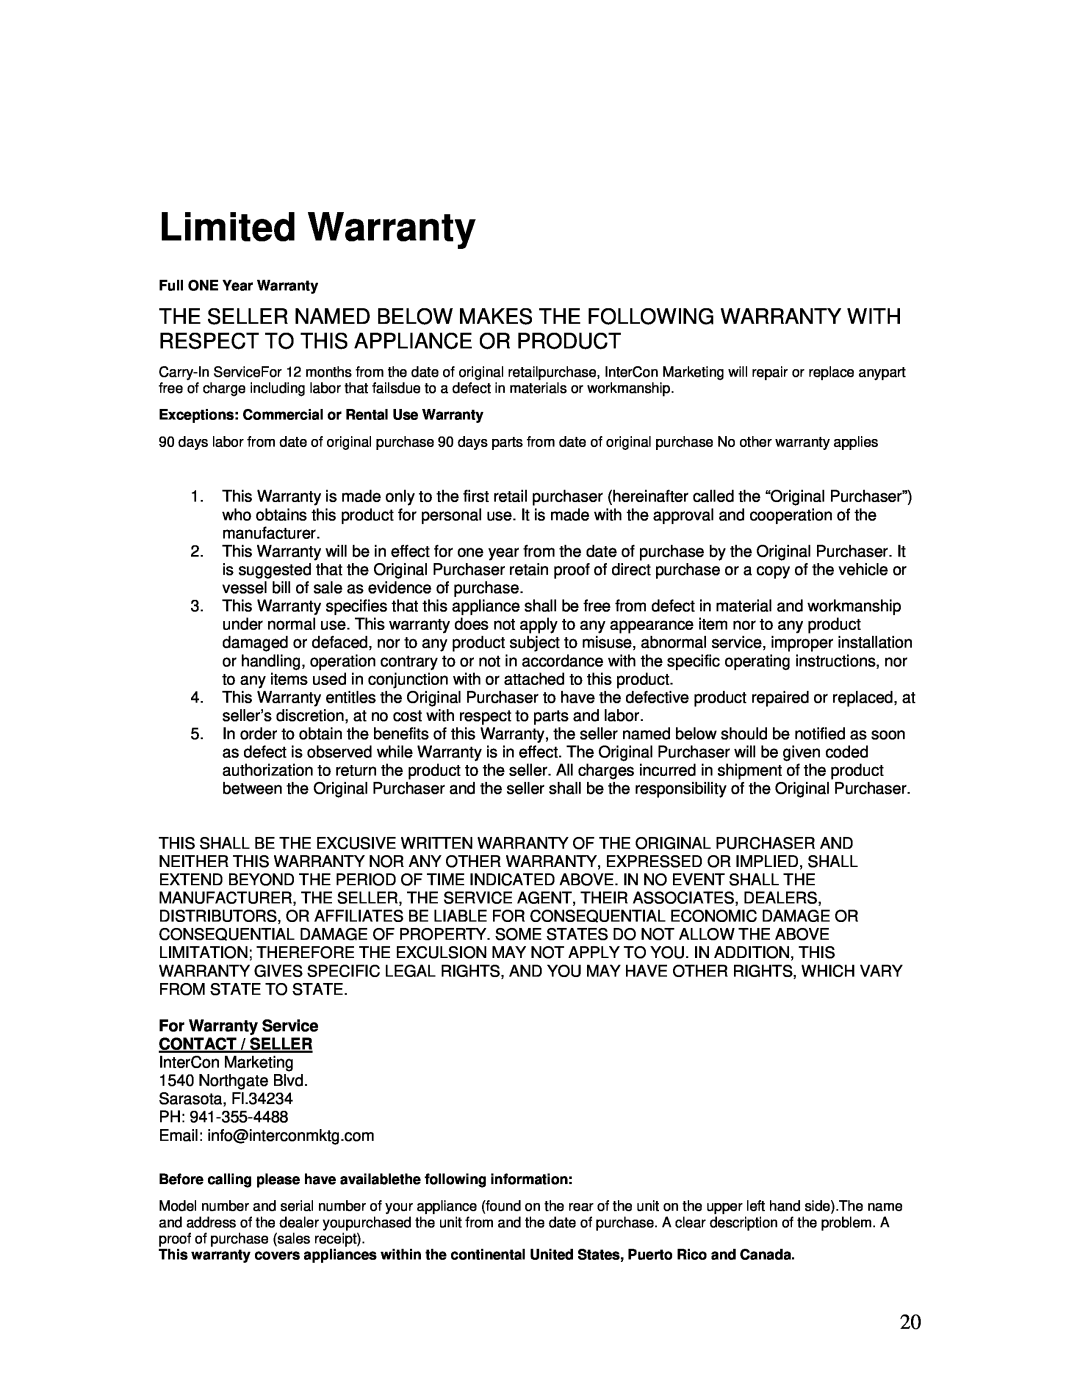 Tappan TDT4030B, TDT4030W user manual Limited Warranty, For Warranty Service CONTACT / SELLER InterCon Marketing 